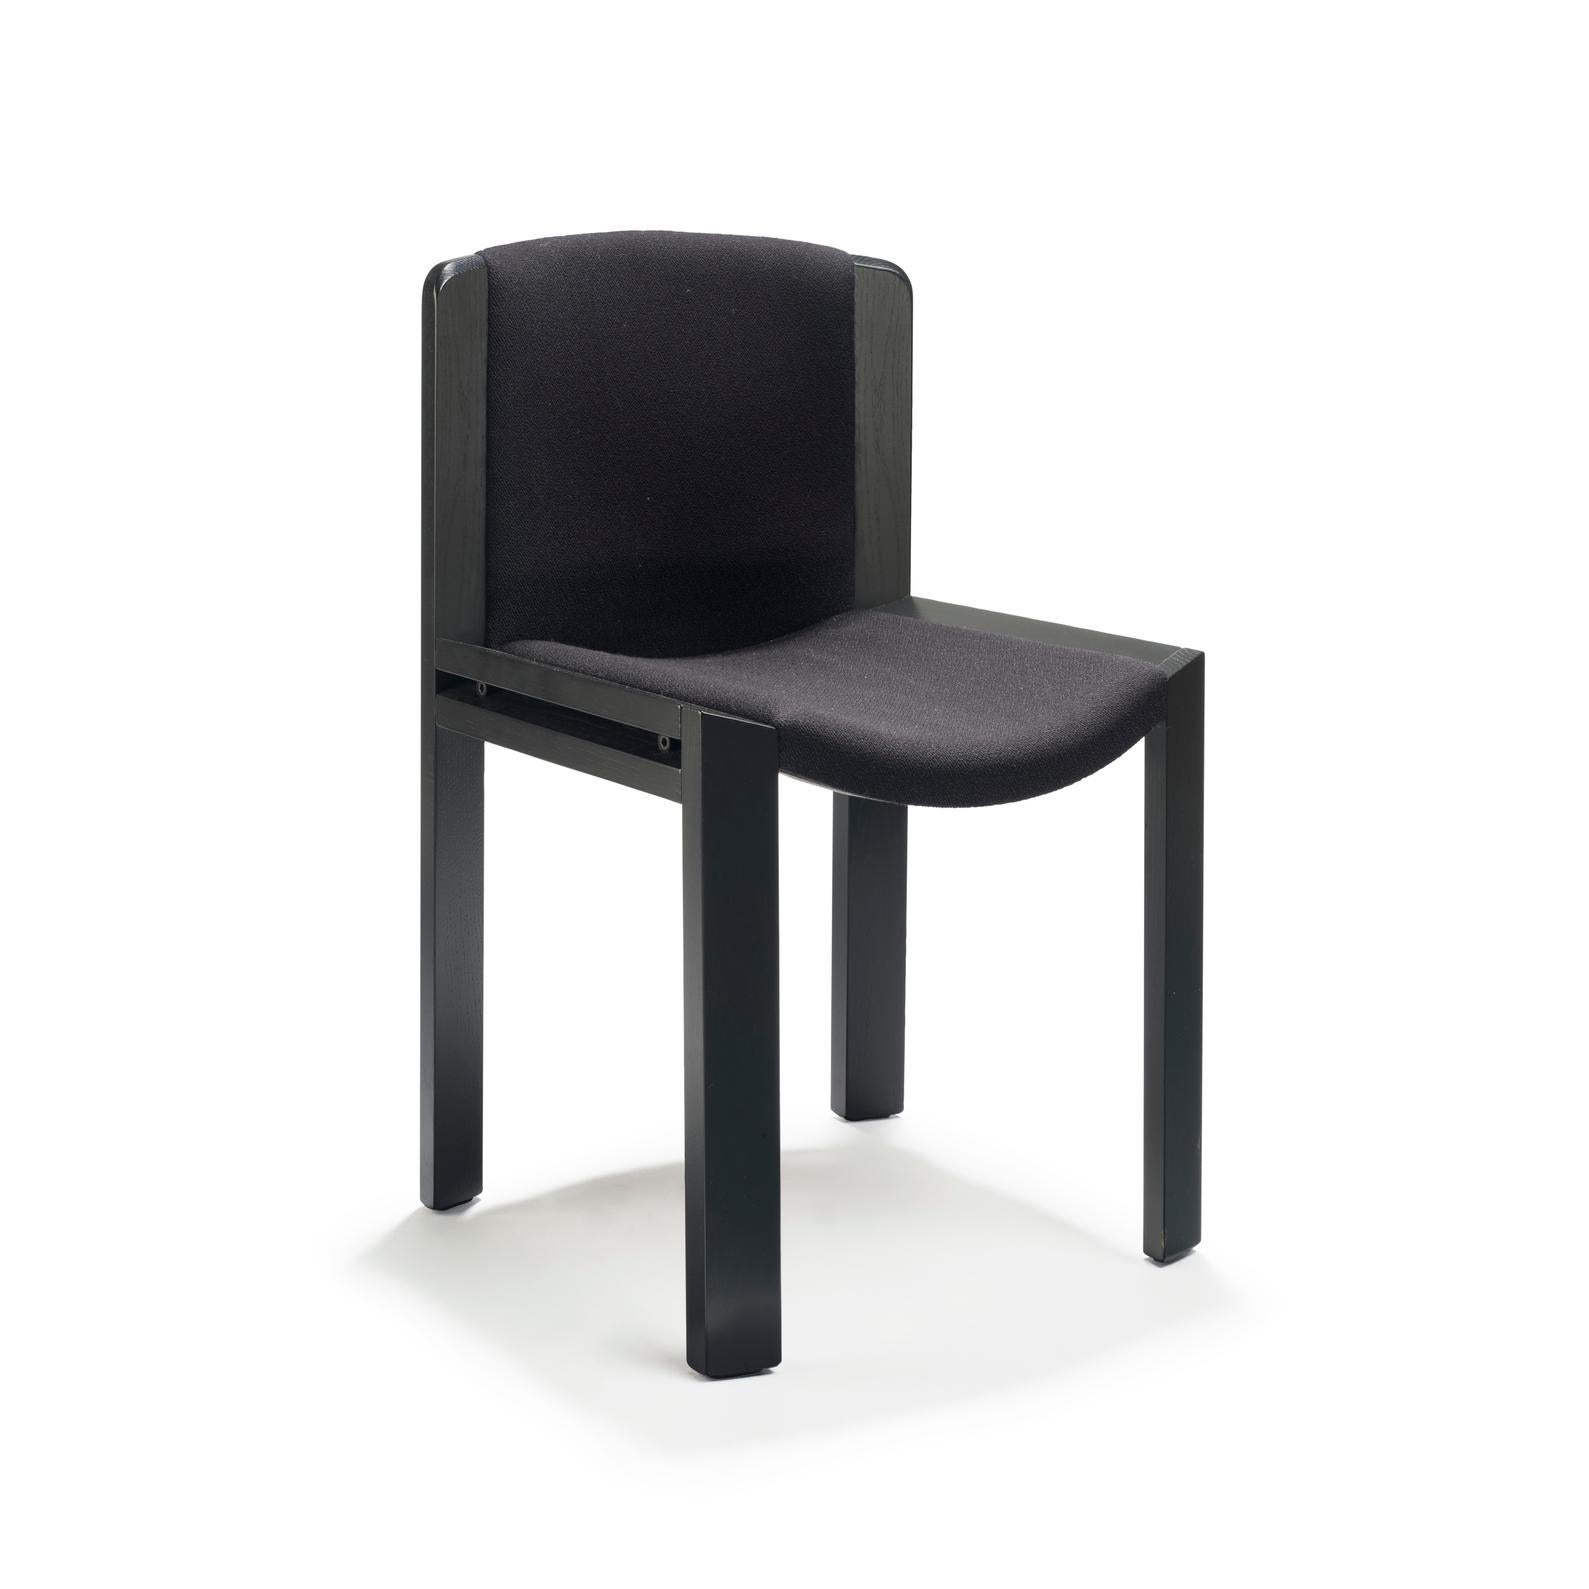 Joe Colombo 'Chair 300' Wood and Sørensen Leather by Karakter 8